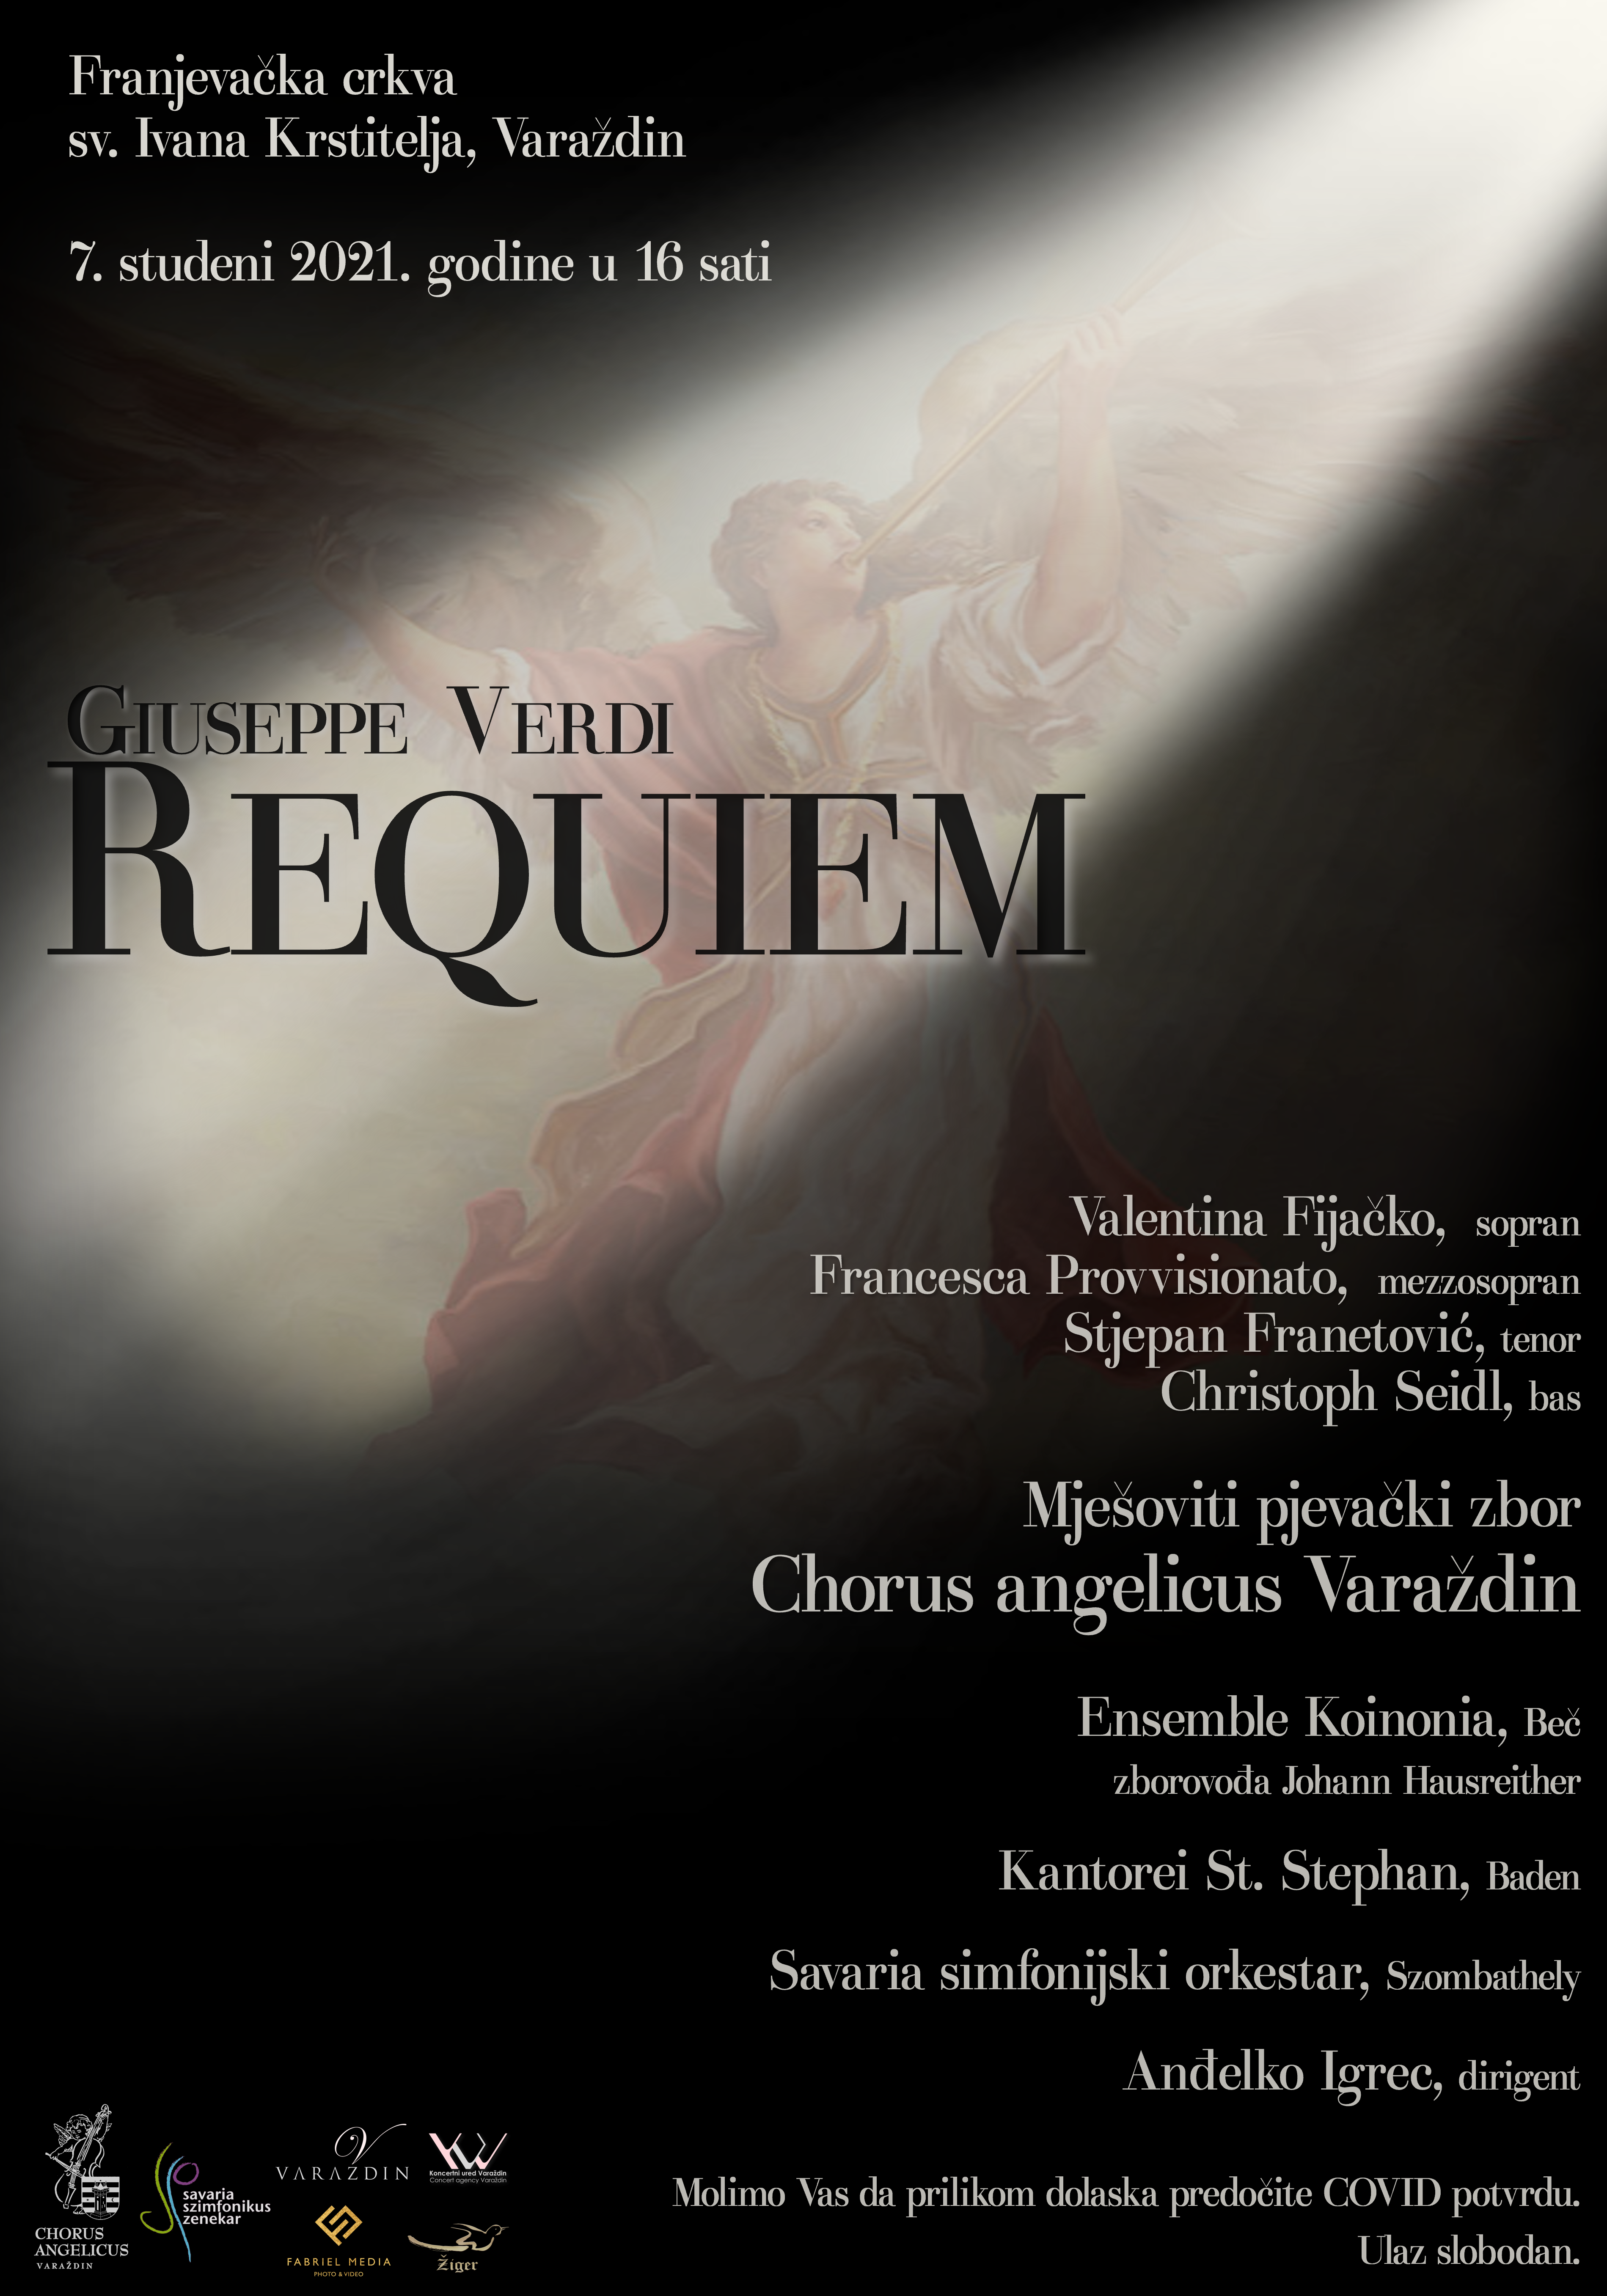 Requiem u Franjevačkoj crkvi u Varaždinu